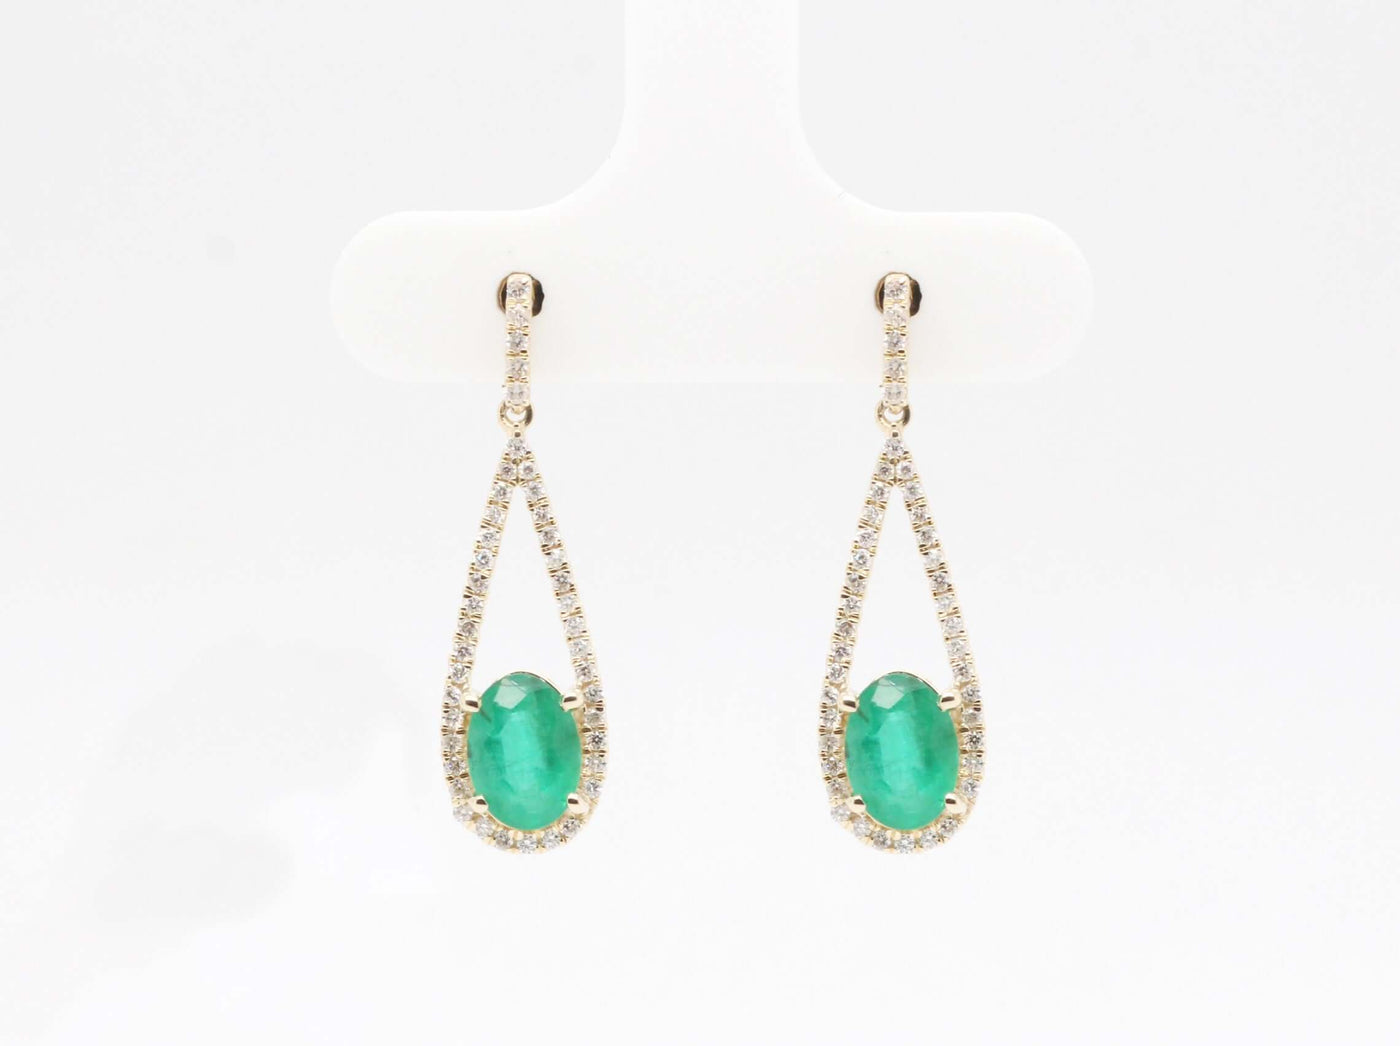 14KY 1.40 Cttw Emerald and Diamond Earrings